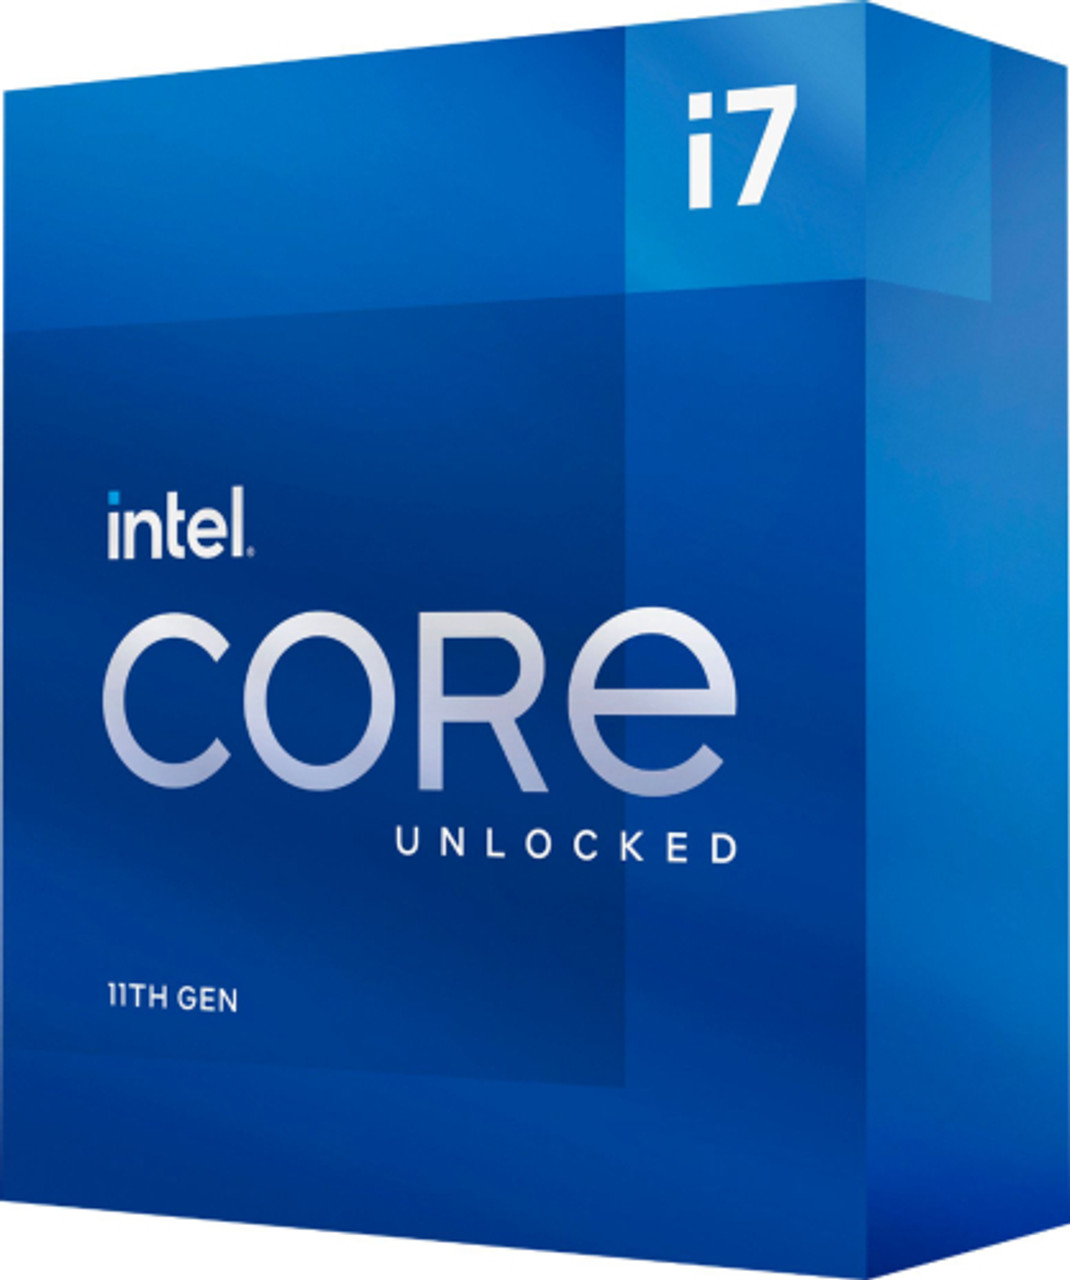 Intel - Core i7-11700K 11th Generation - 8 Core - 16 Thread - 3.6  to 5.0 GHz - LGA1200 - Unlocked Desktop Processor